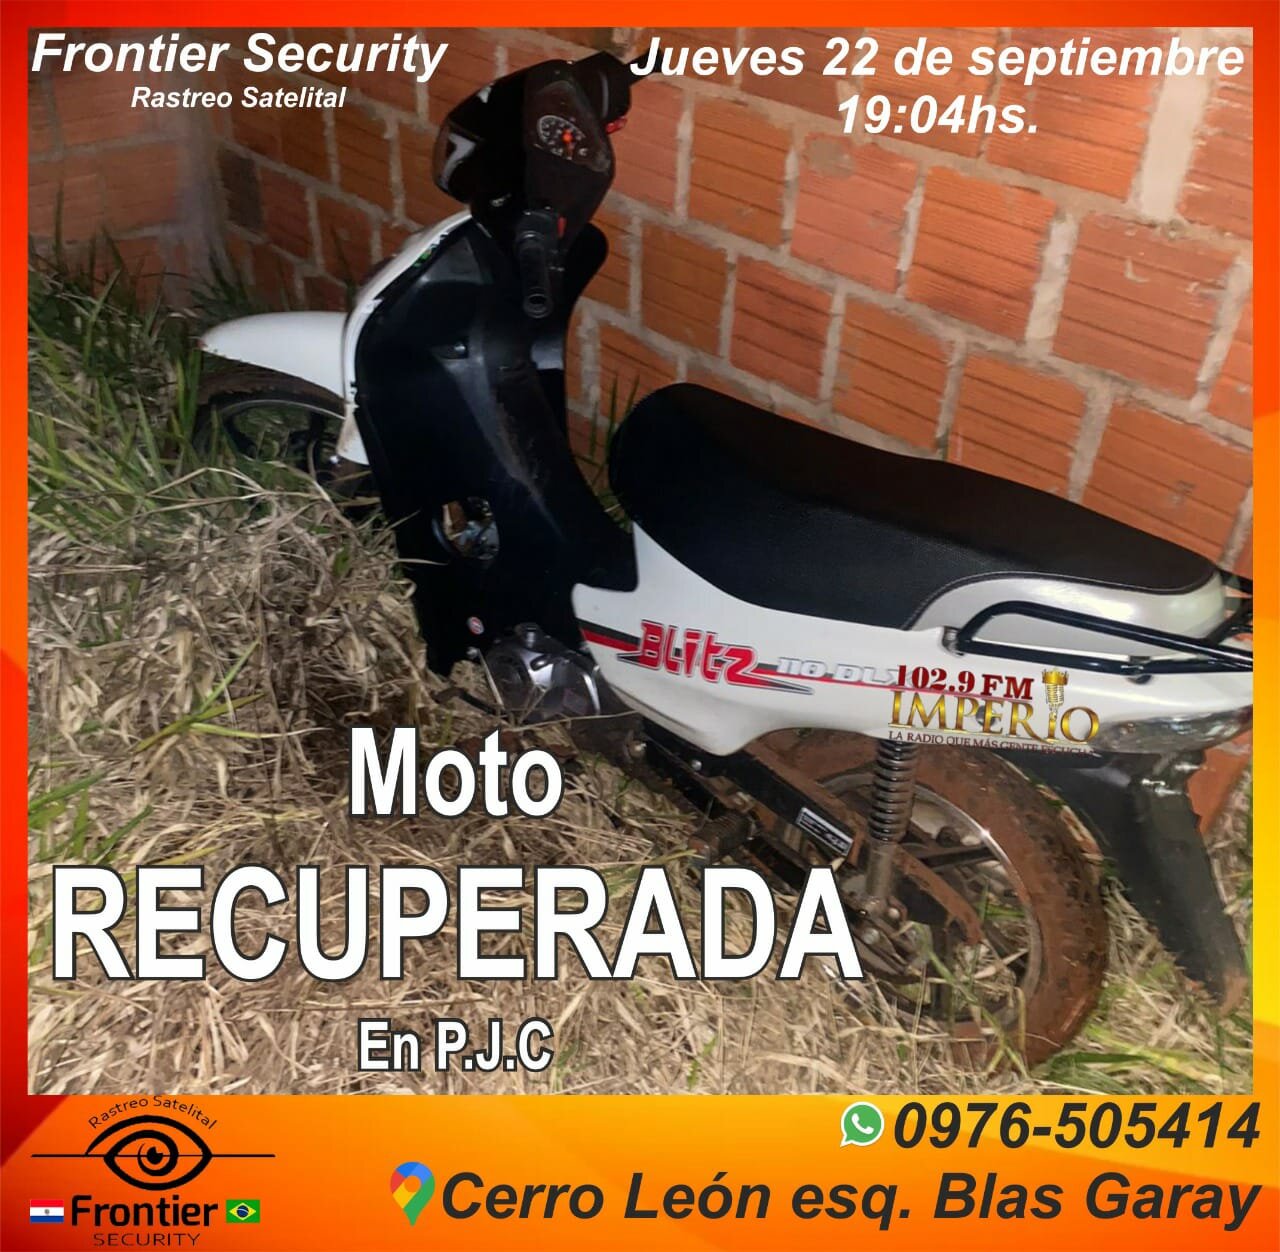 Motocicleta hurtada fue recuperada en Villa Guillermina gracias a Frontier Security